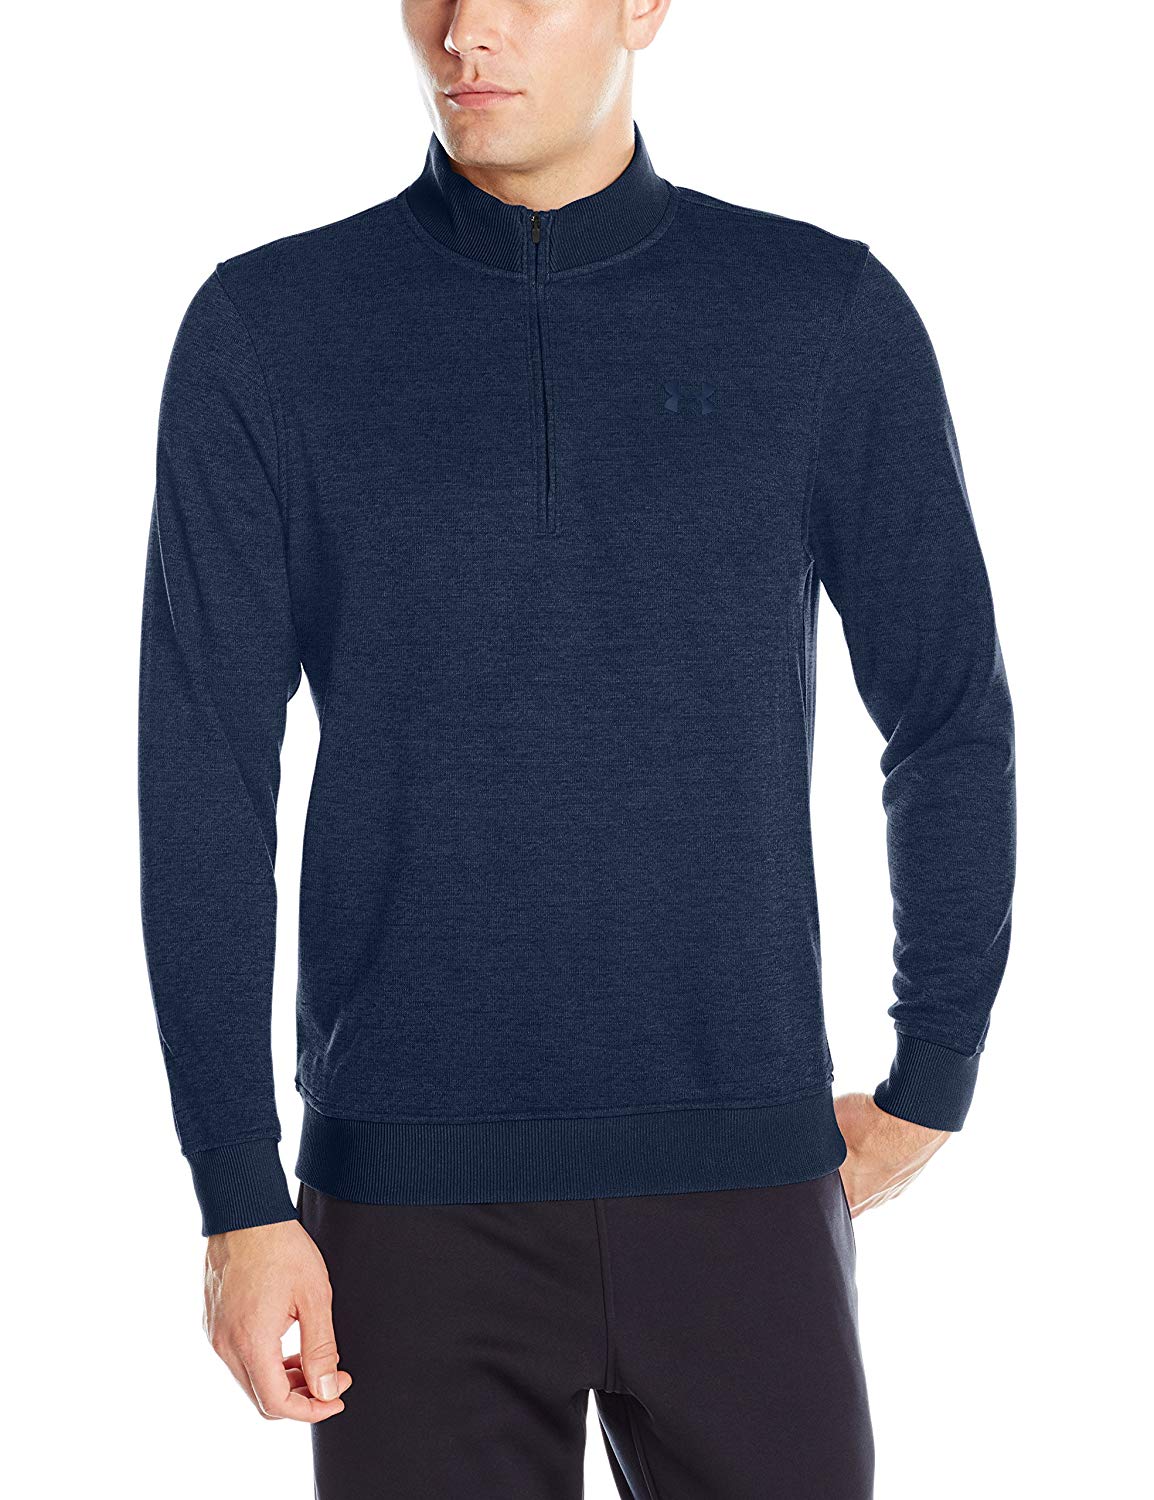 Under Armour Mens Storm Sweater Fleece Golf Pullovers